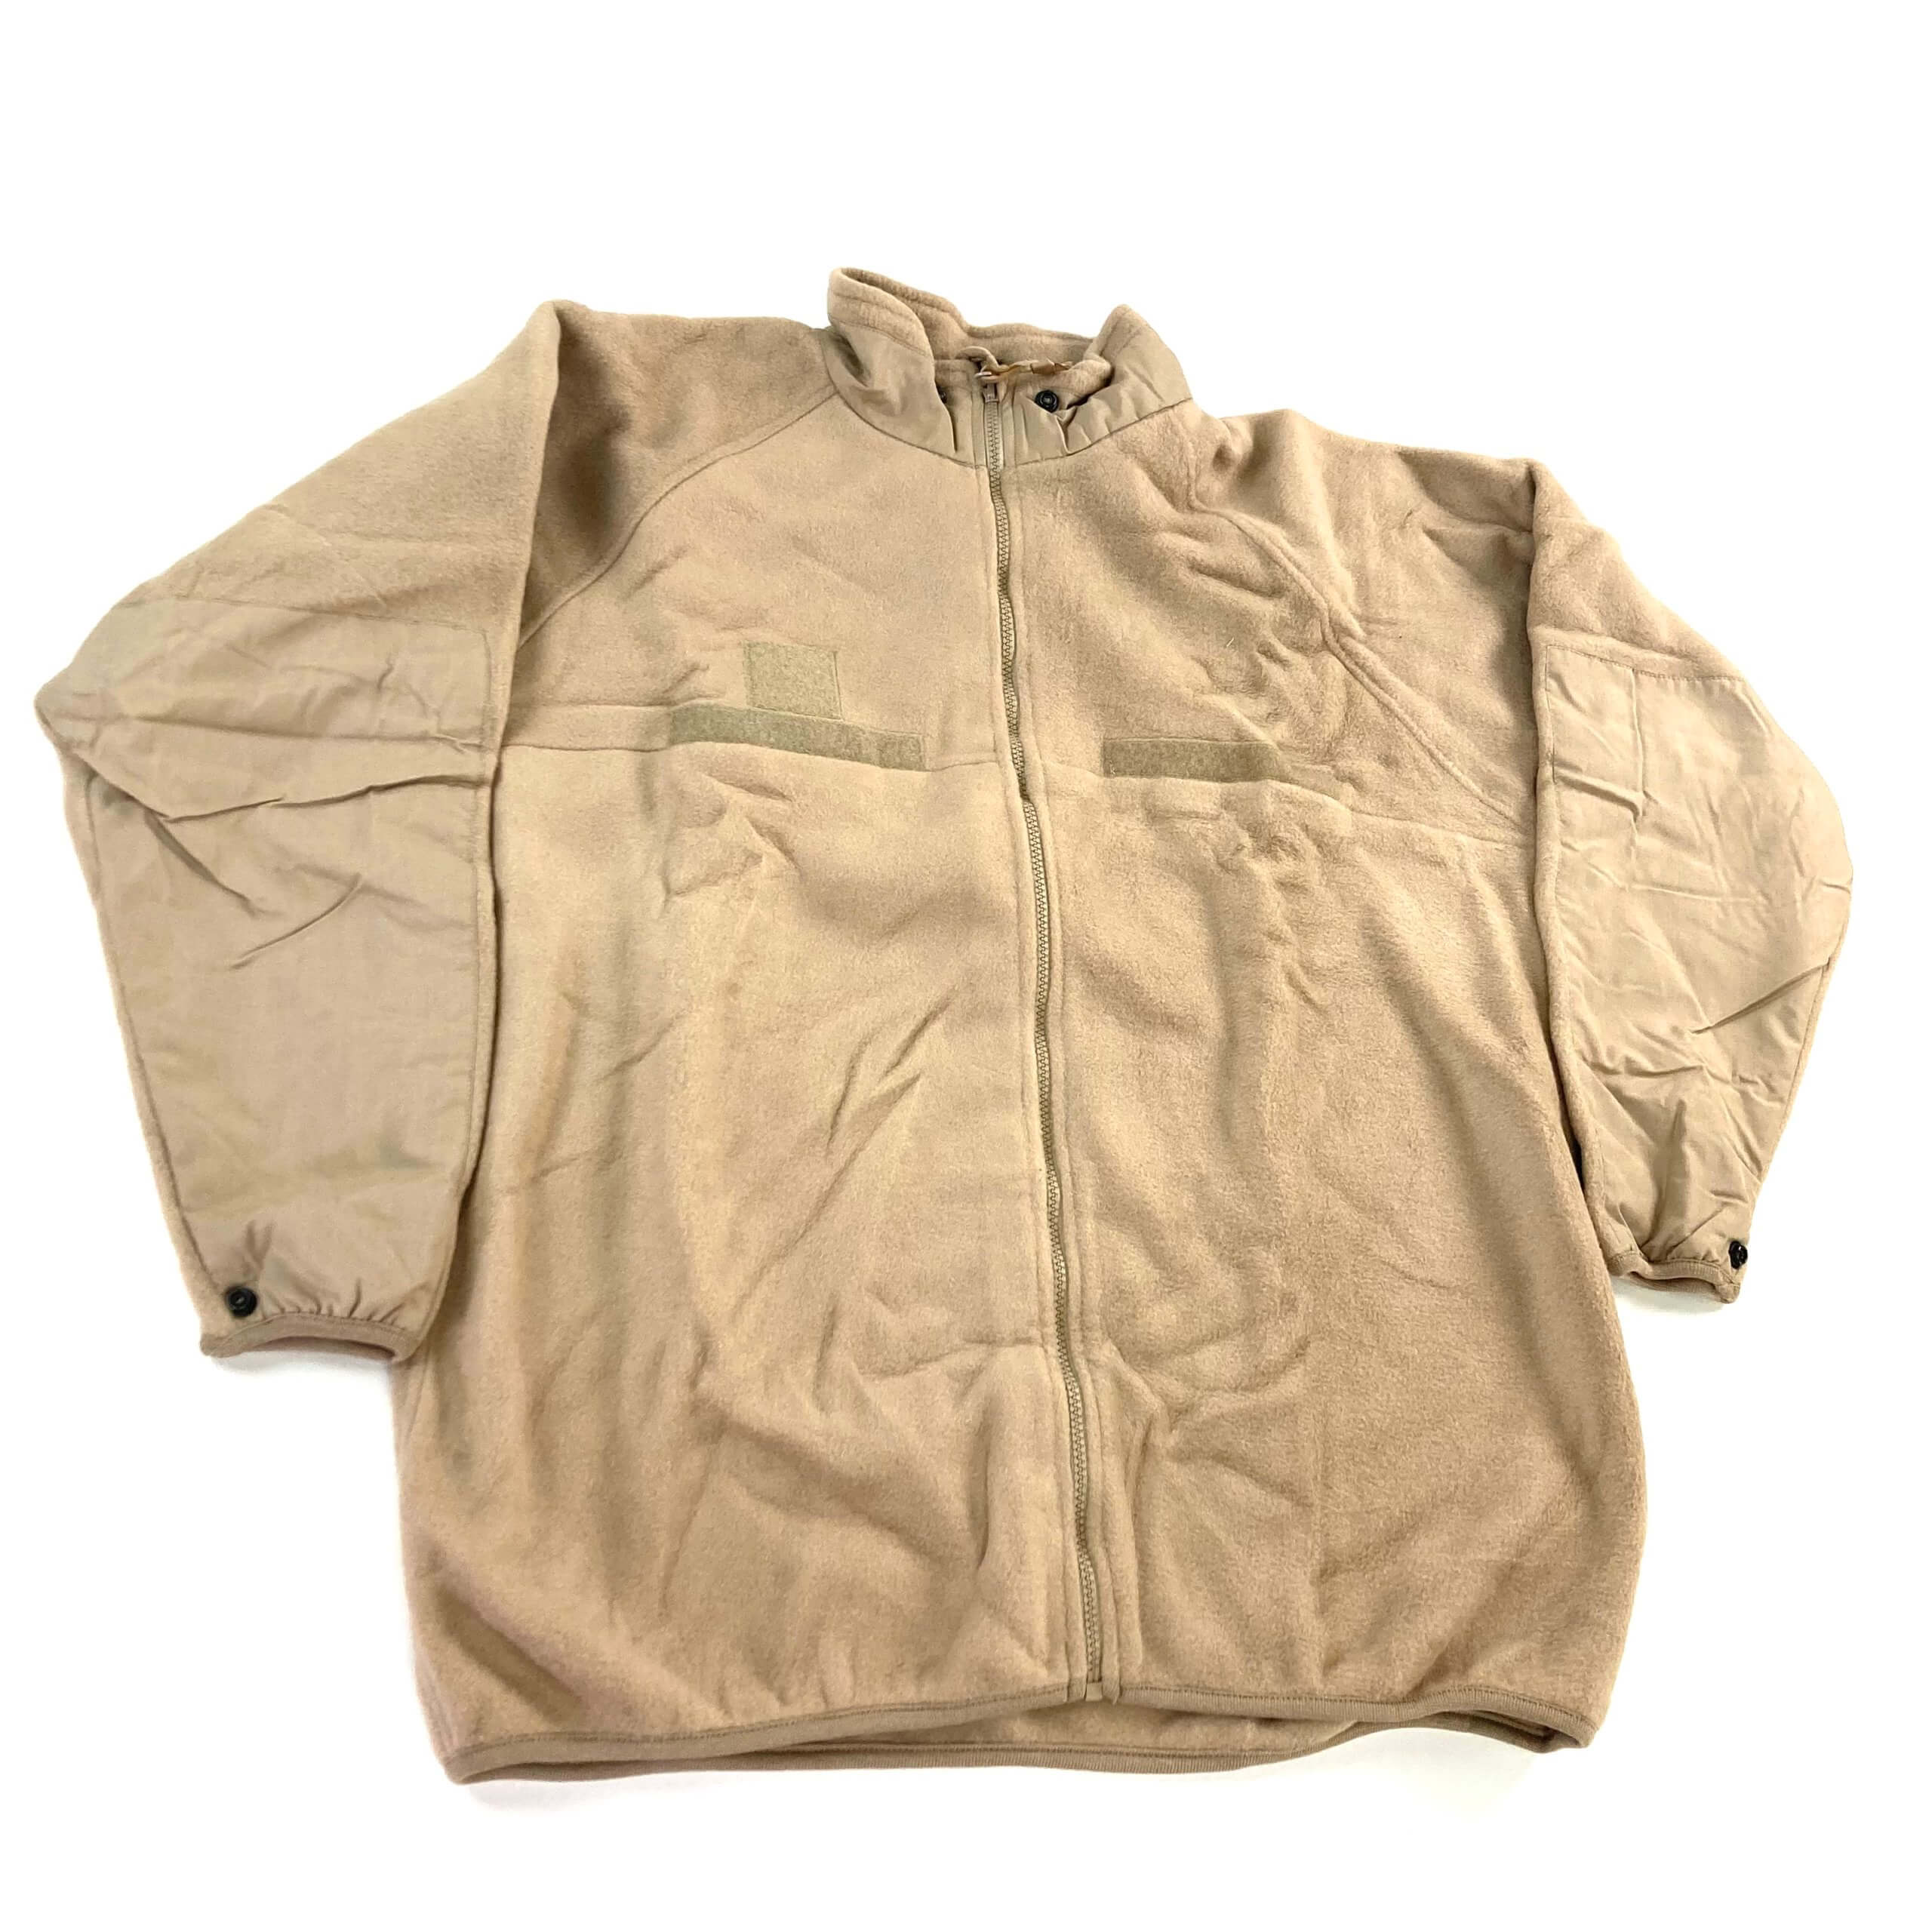 POLARTEC FREE Mid Weight Jacket Liner, EWOL - Army Surplus Online